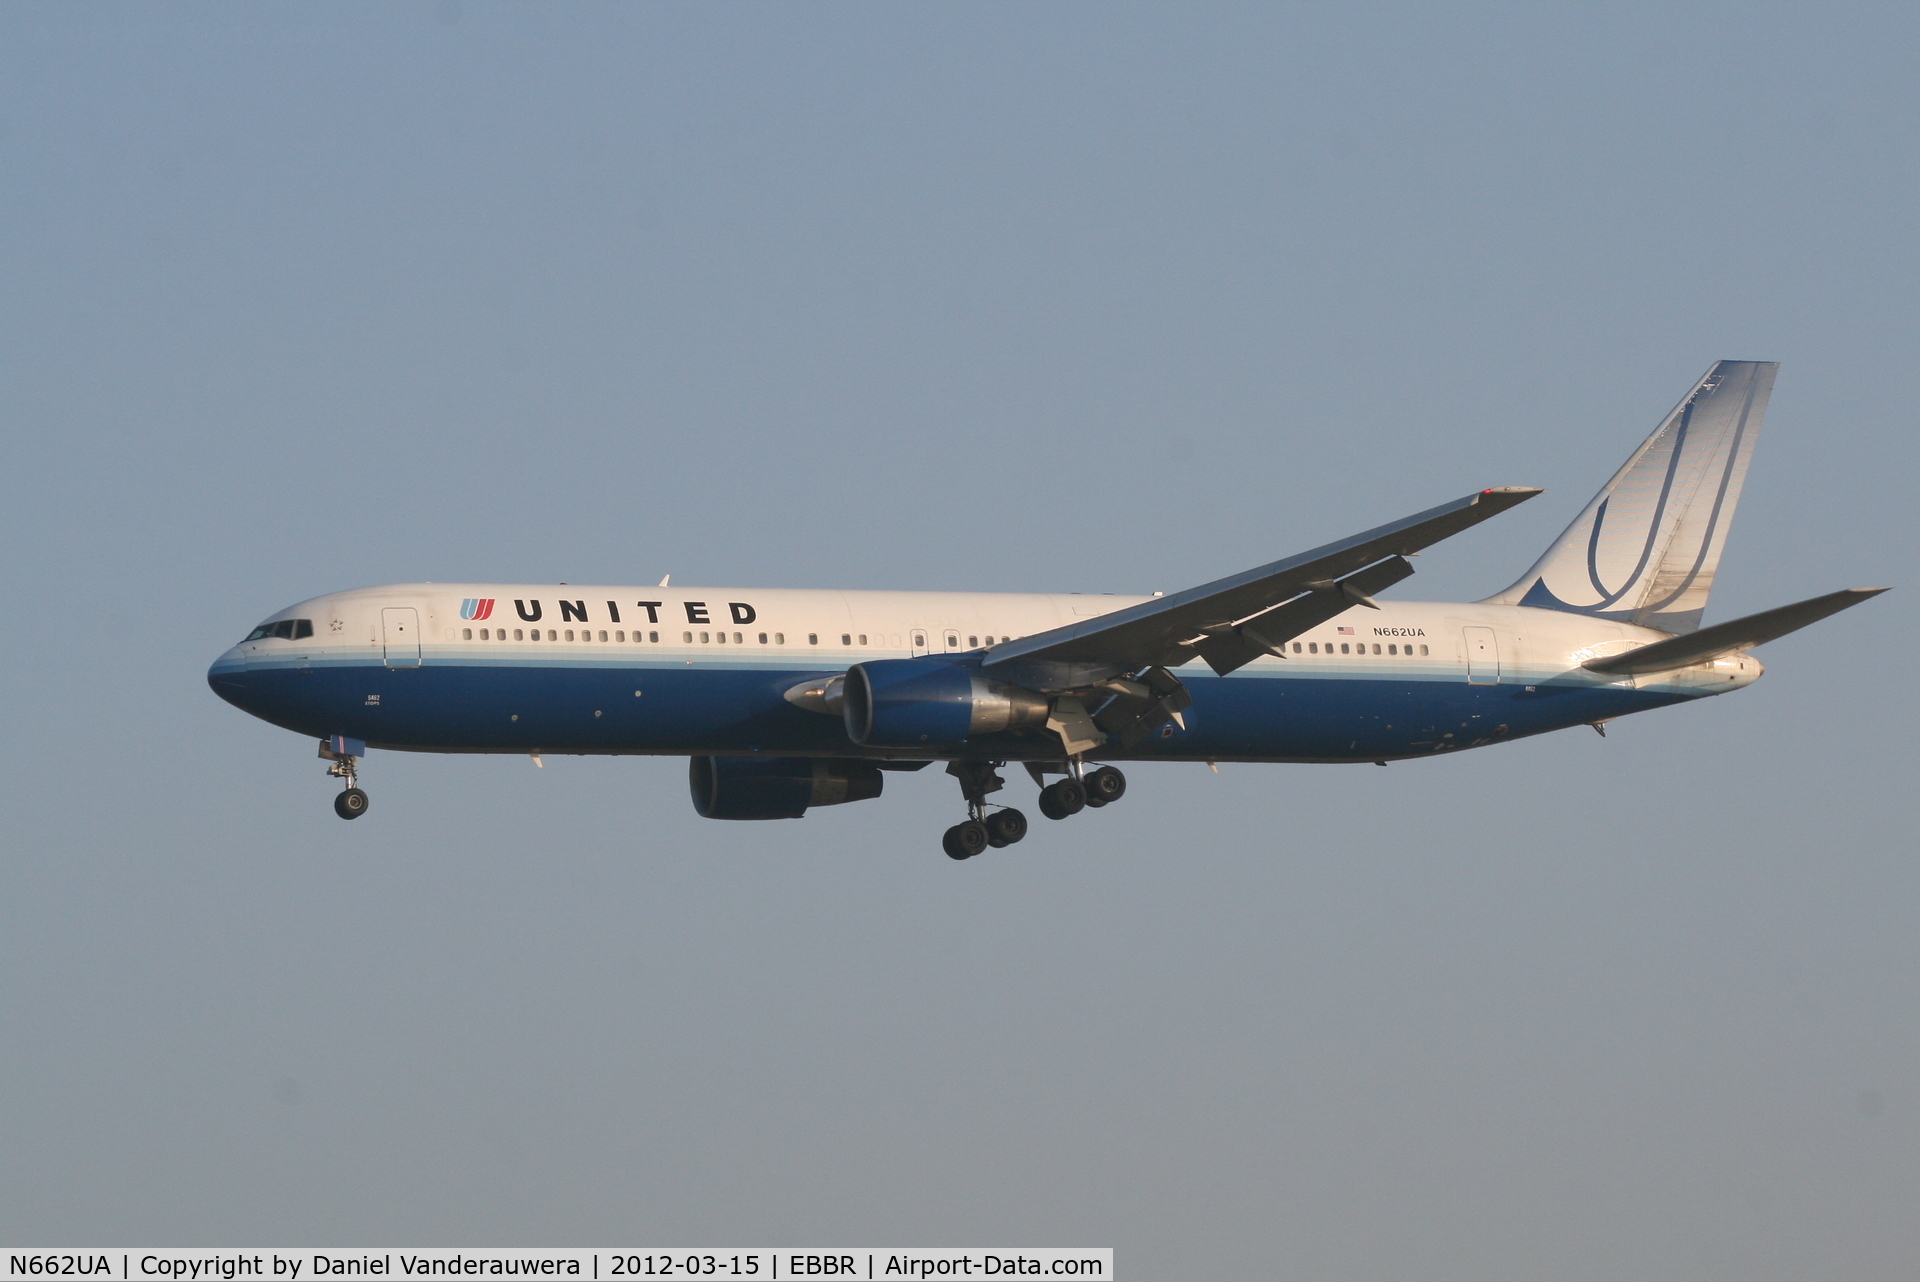 N662UA, 1993 Boeing 767-322 C/N 27159, Arrival of flight UA972 to RWY 25L